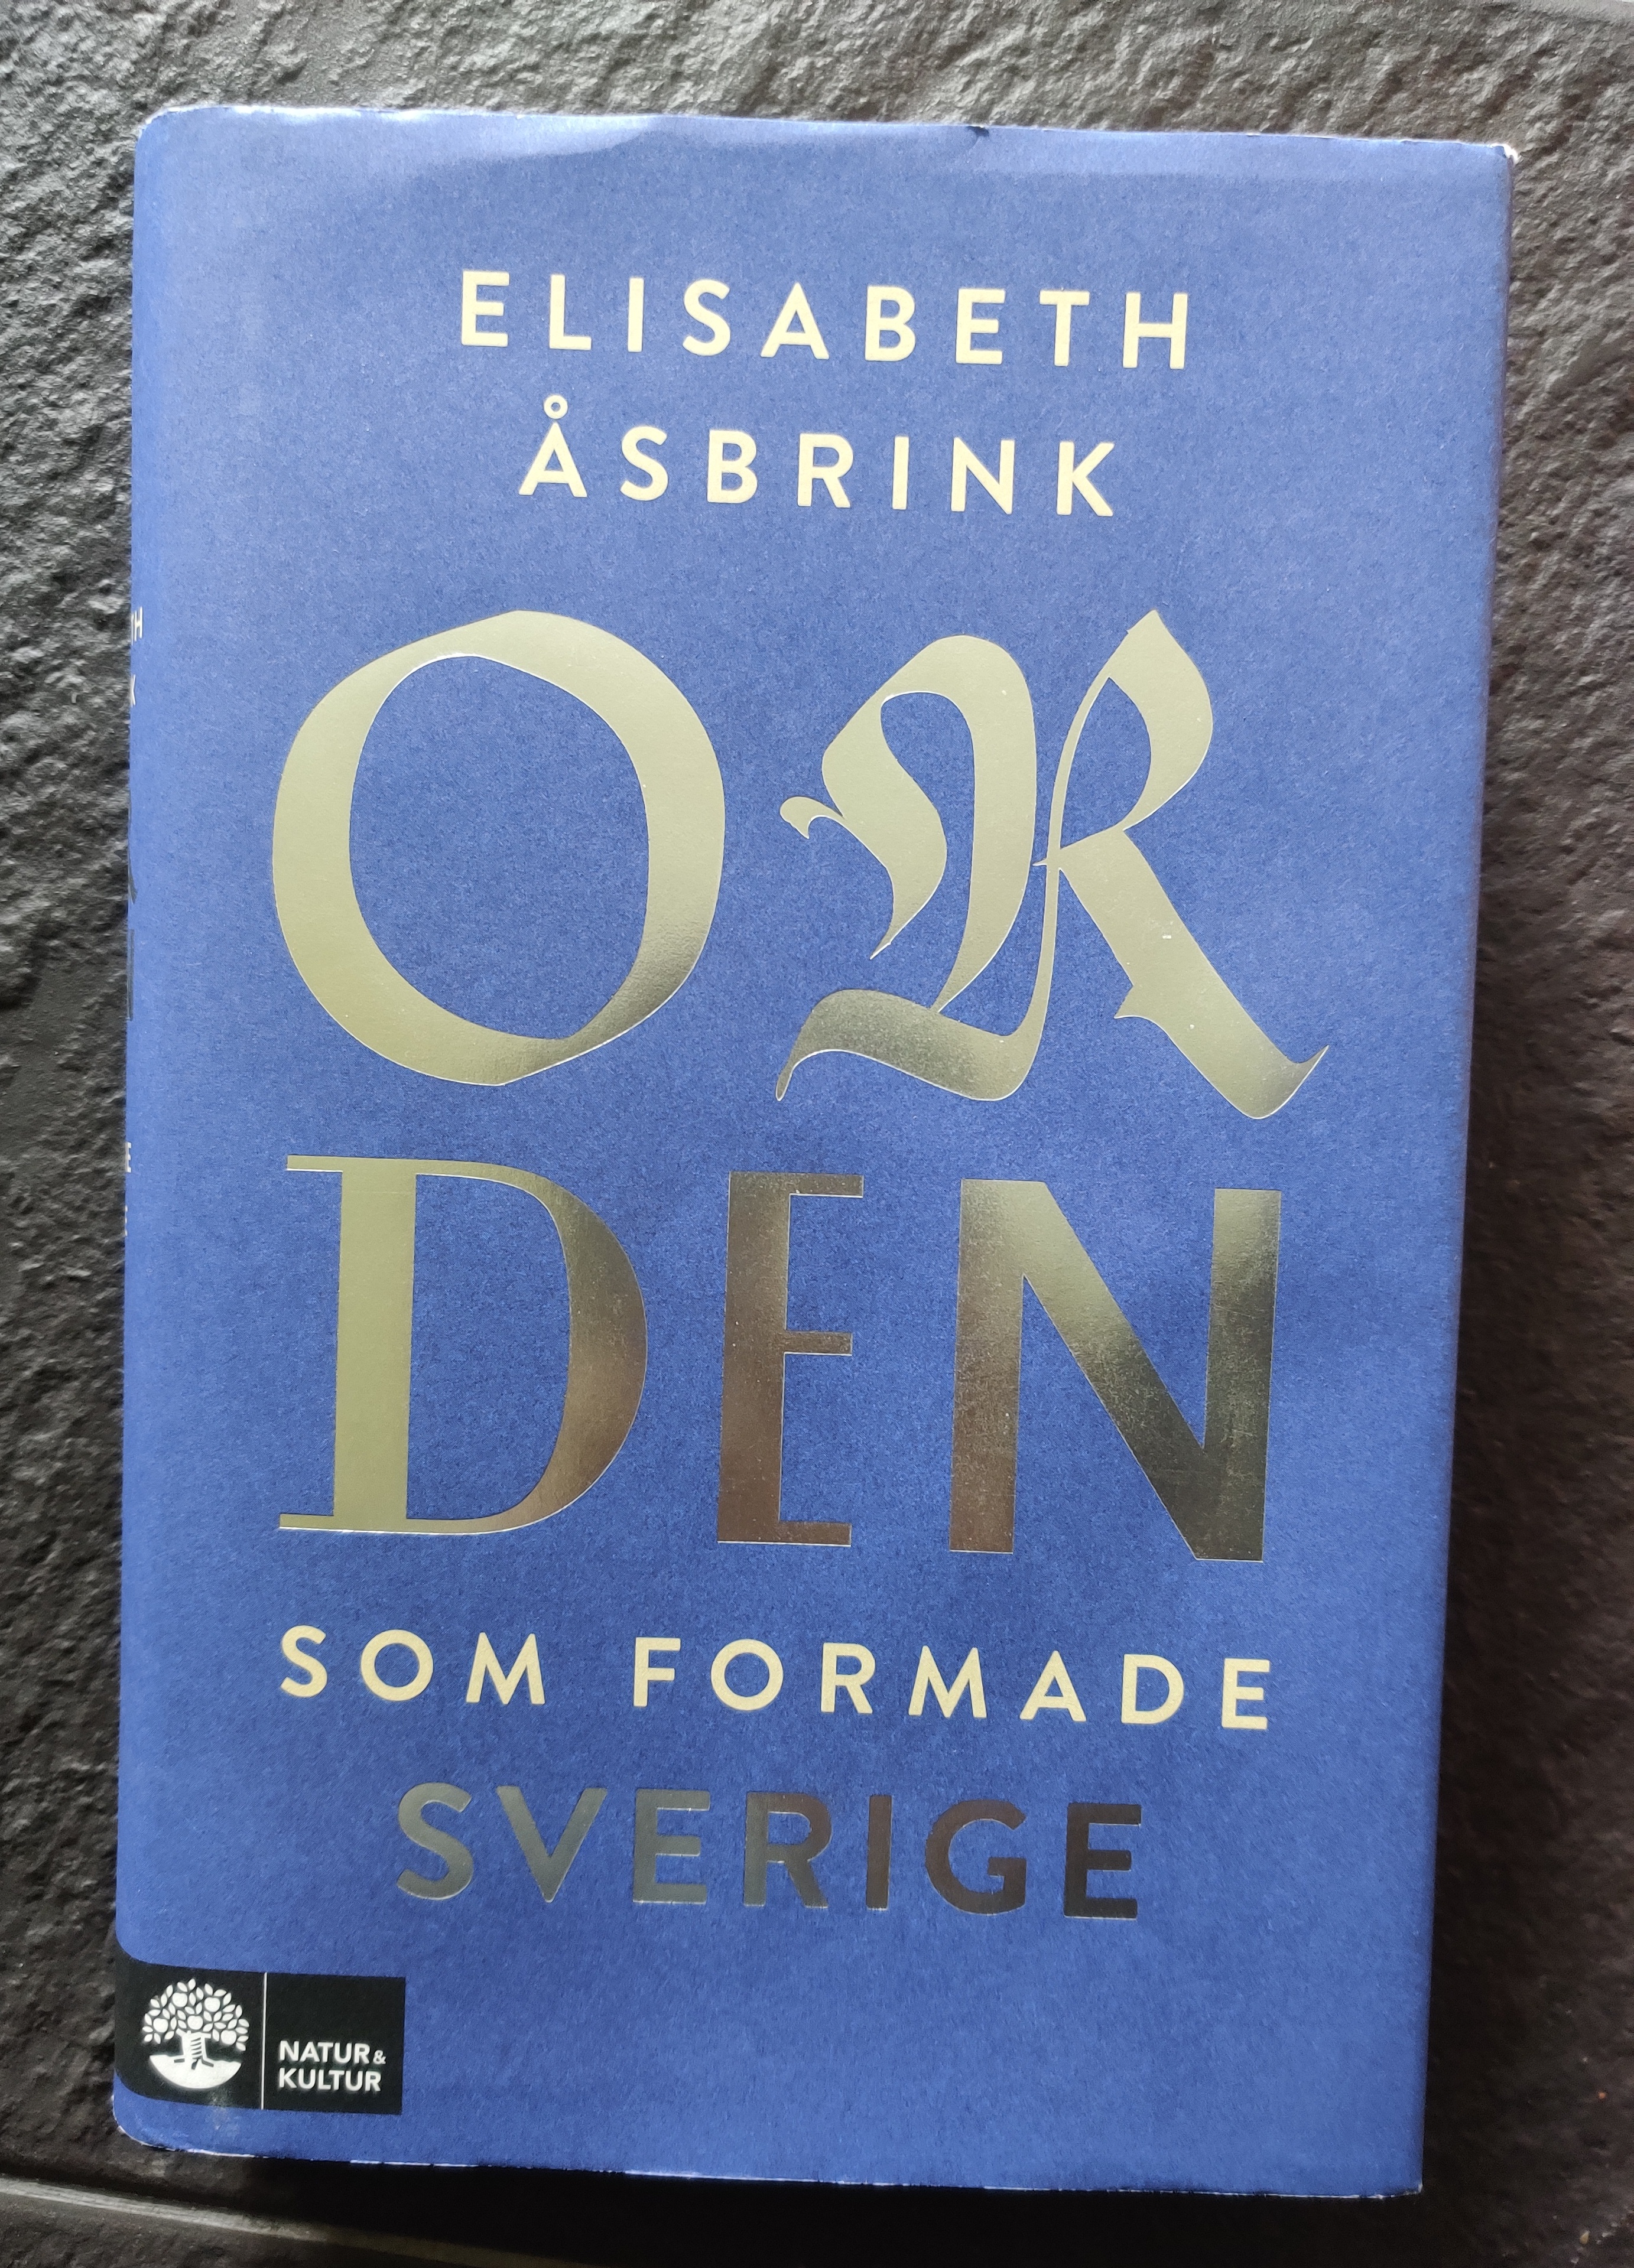 “Orden som formade Sverige” cover